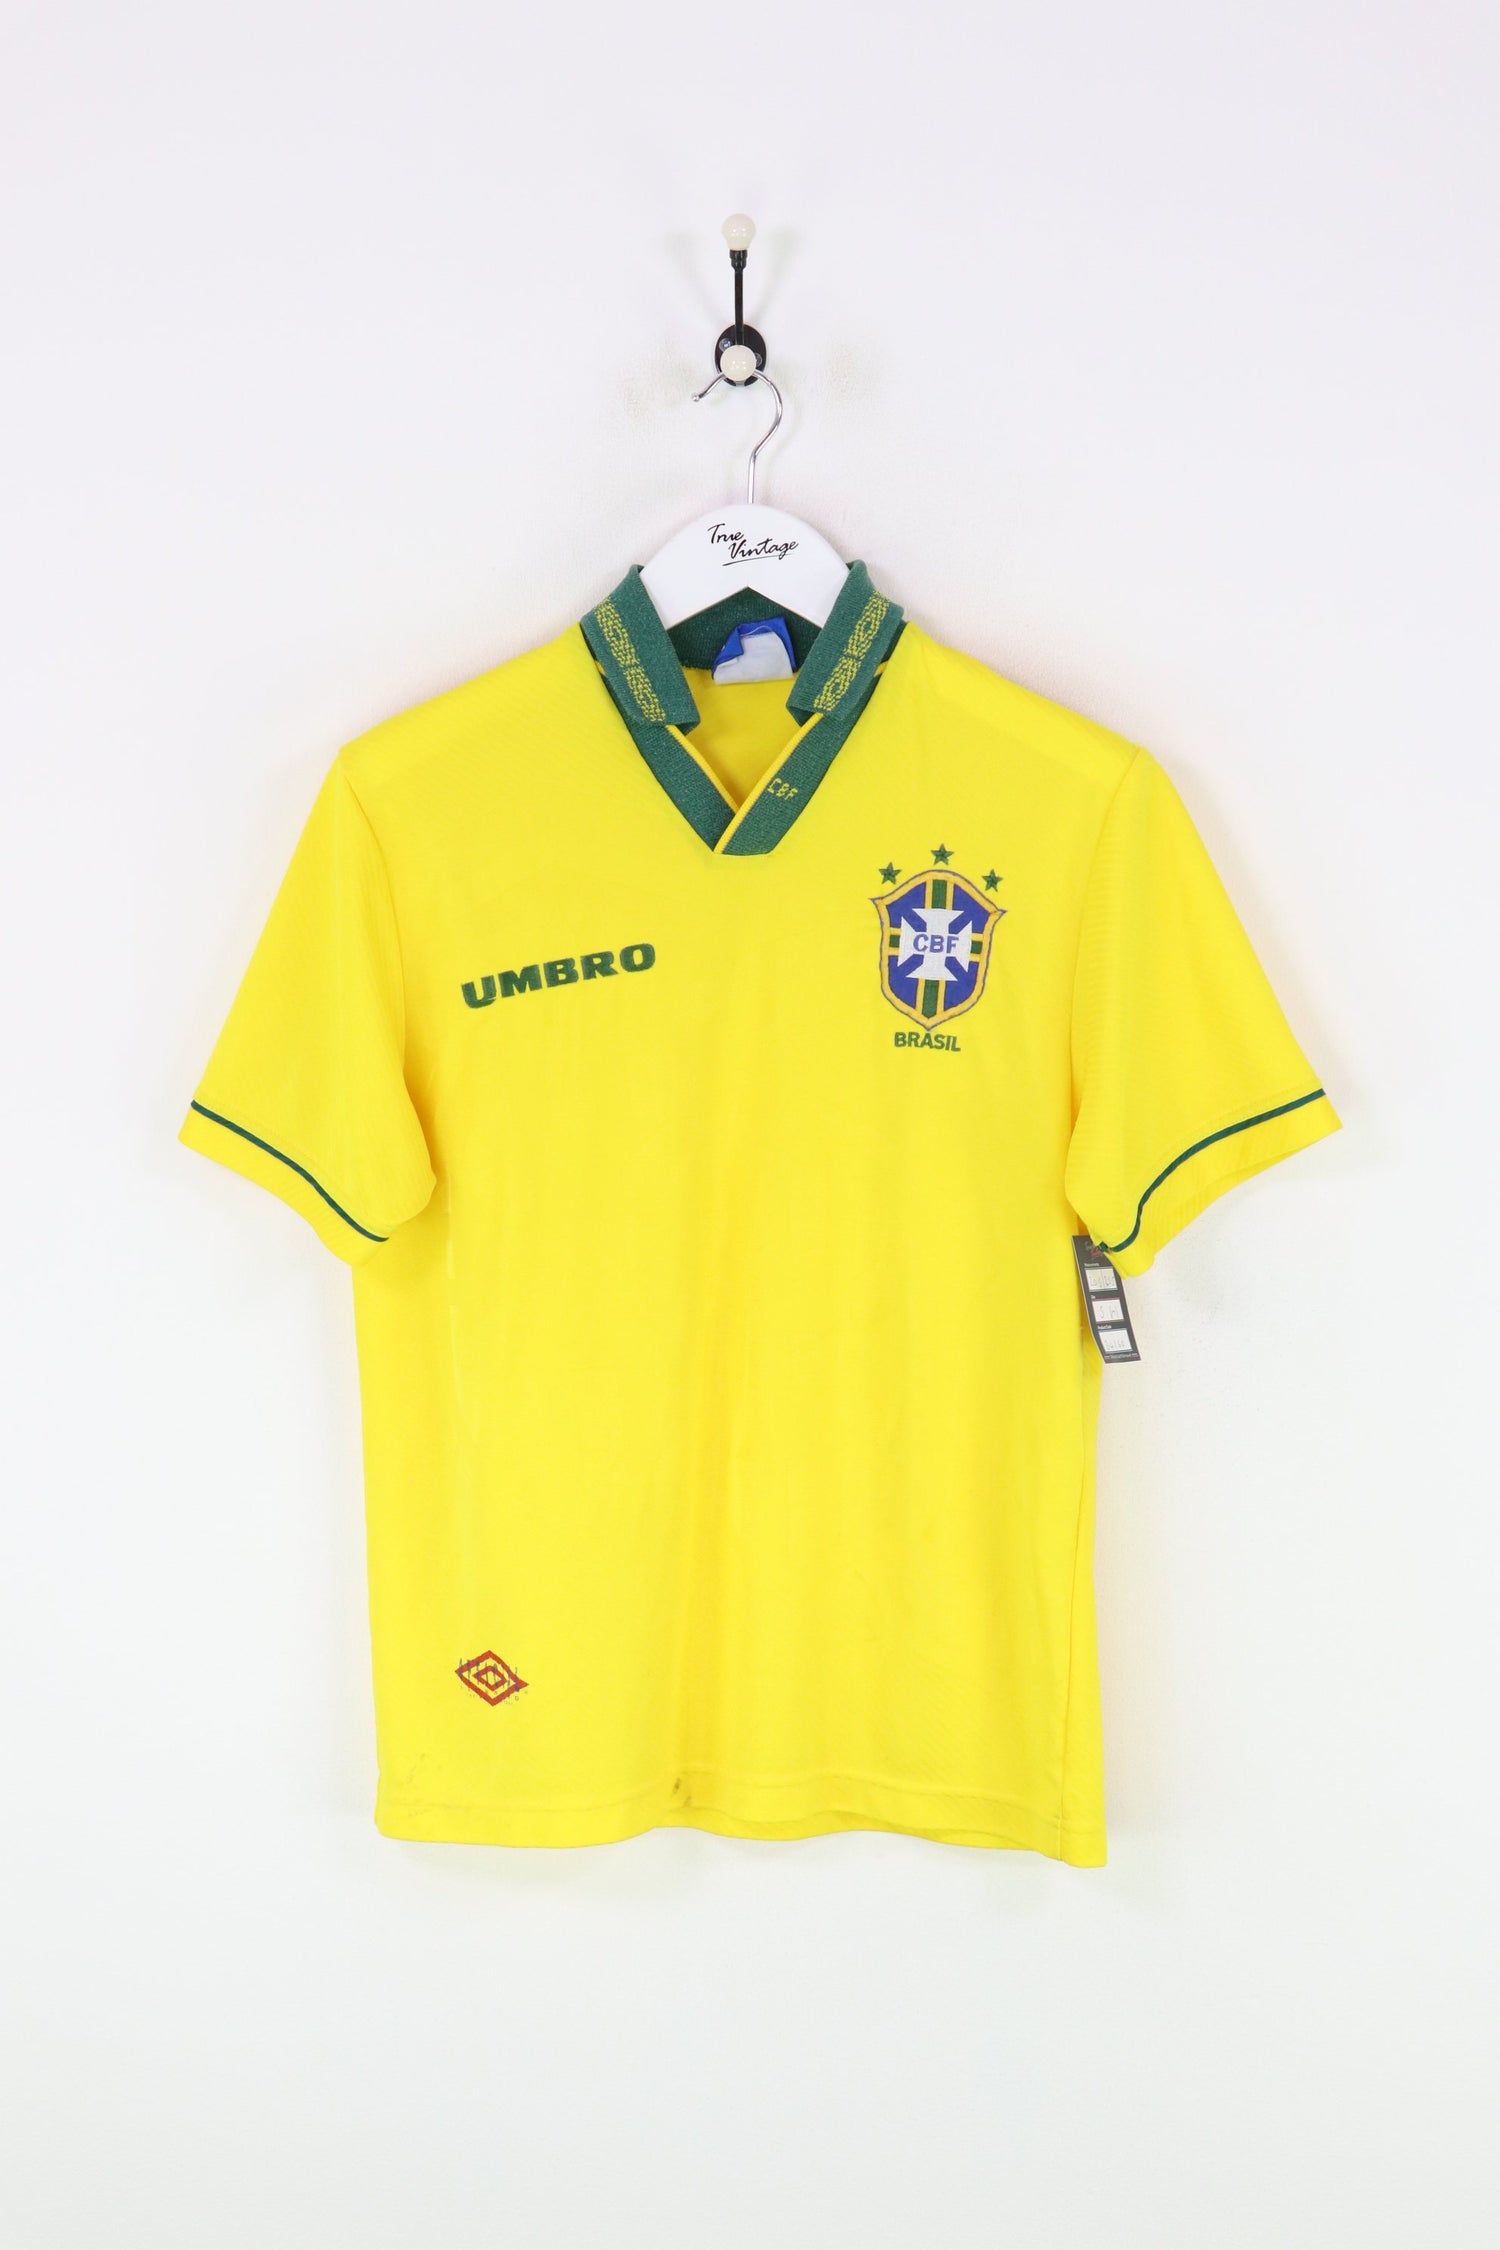 Adidas Brazil 1822 Yellow Soccer Jacket Men's Large Federative De